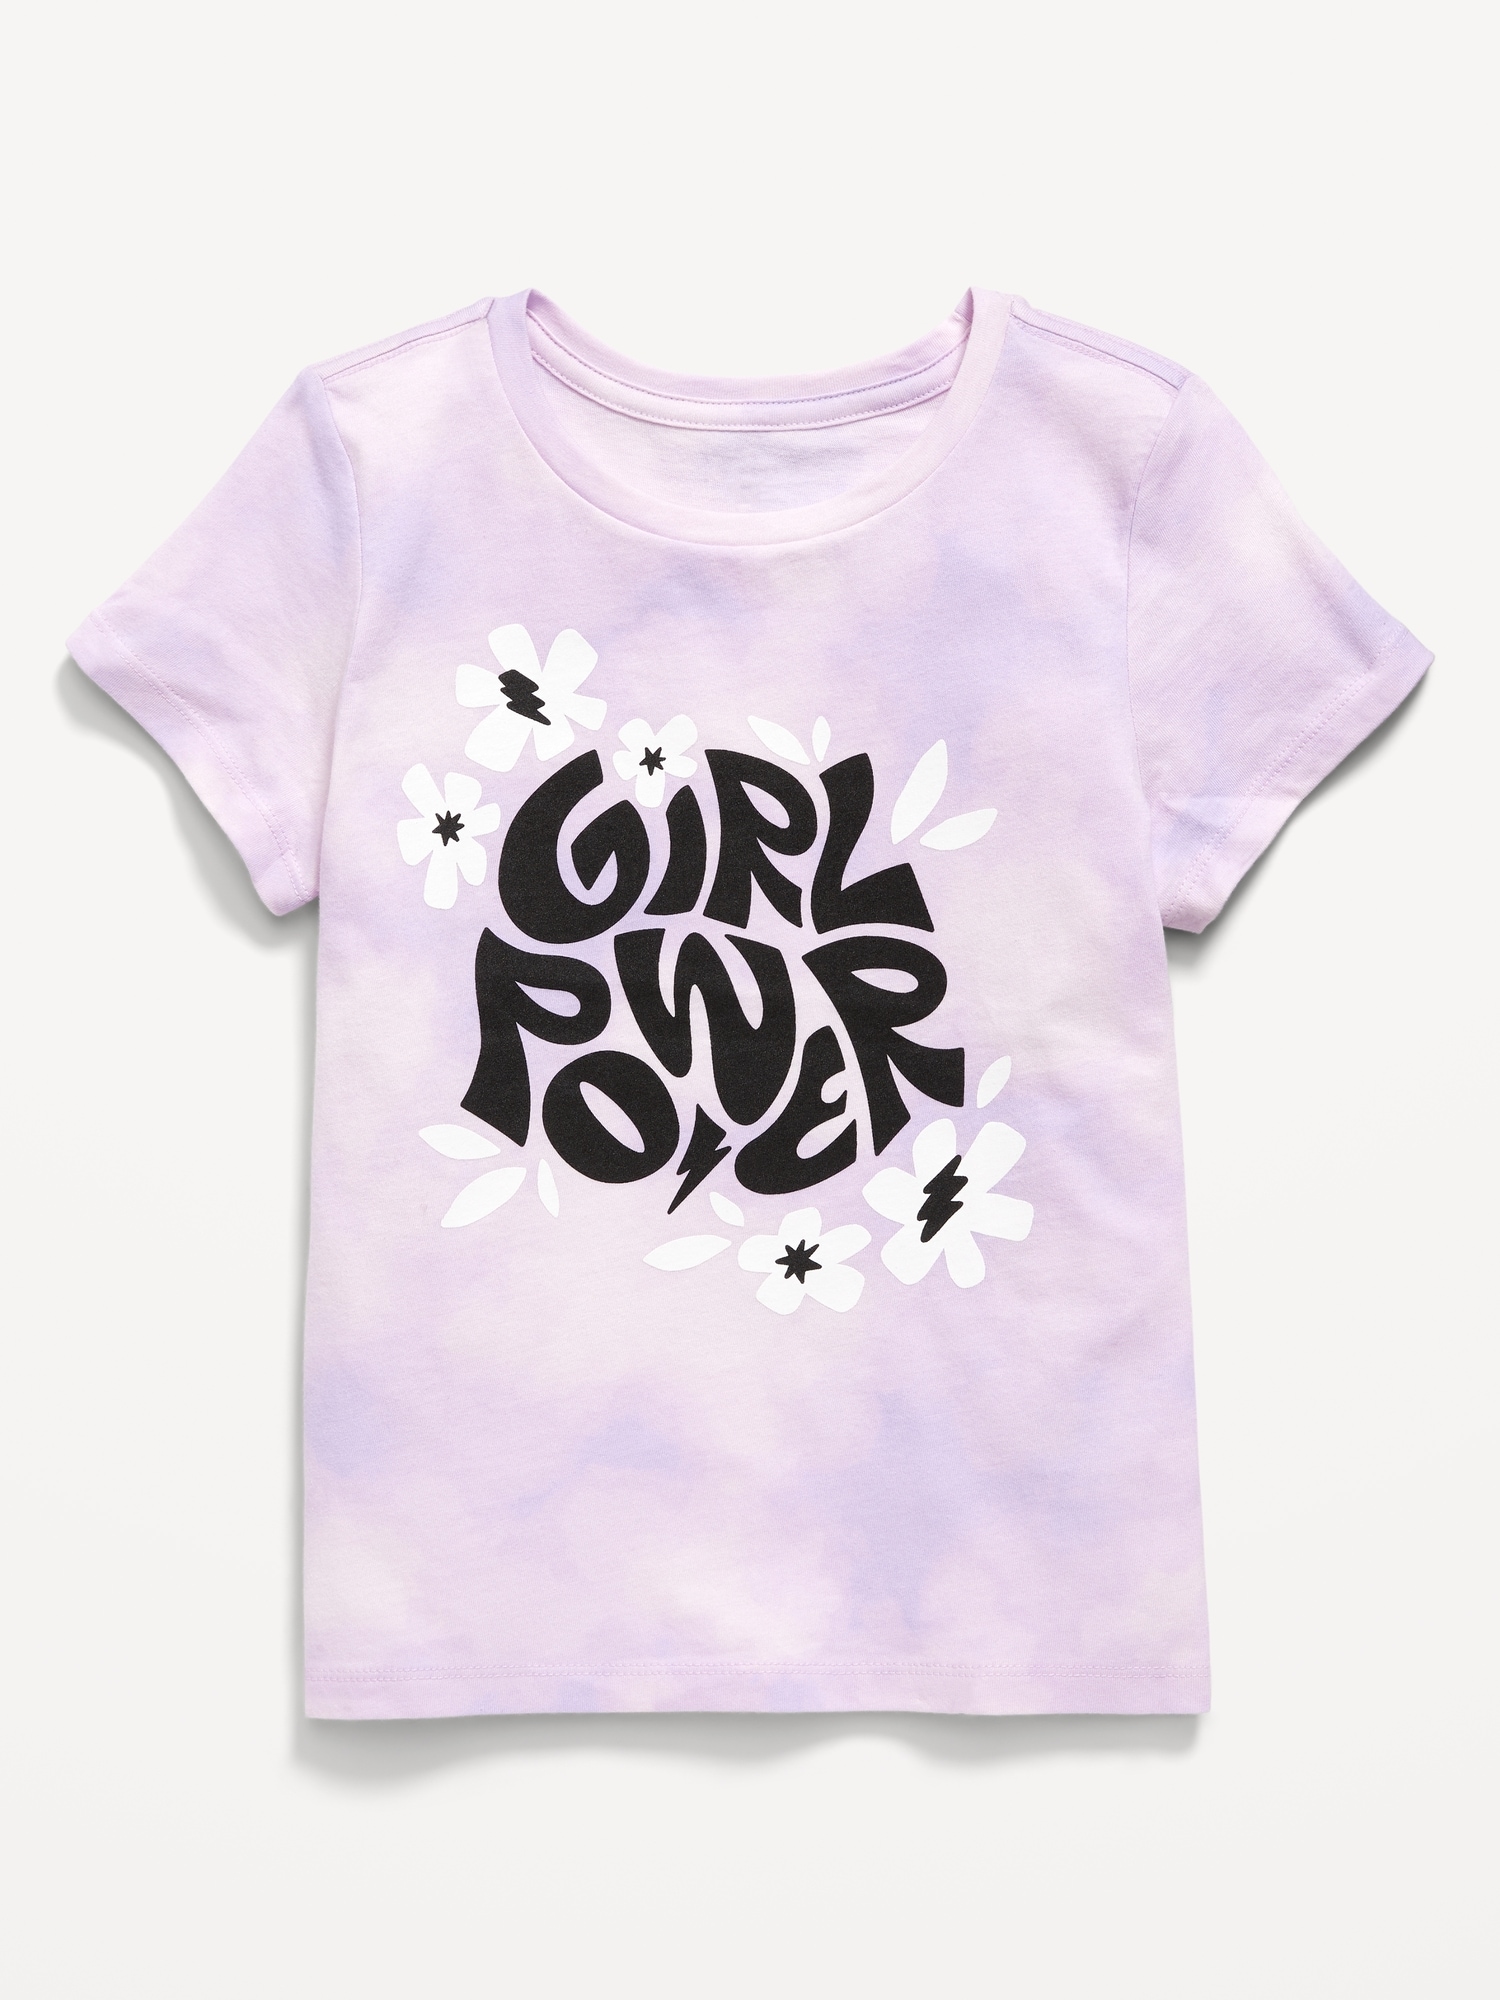 Short-Sleeve Graphic T-Shirt for Girls Hot Deal